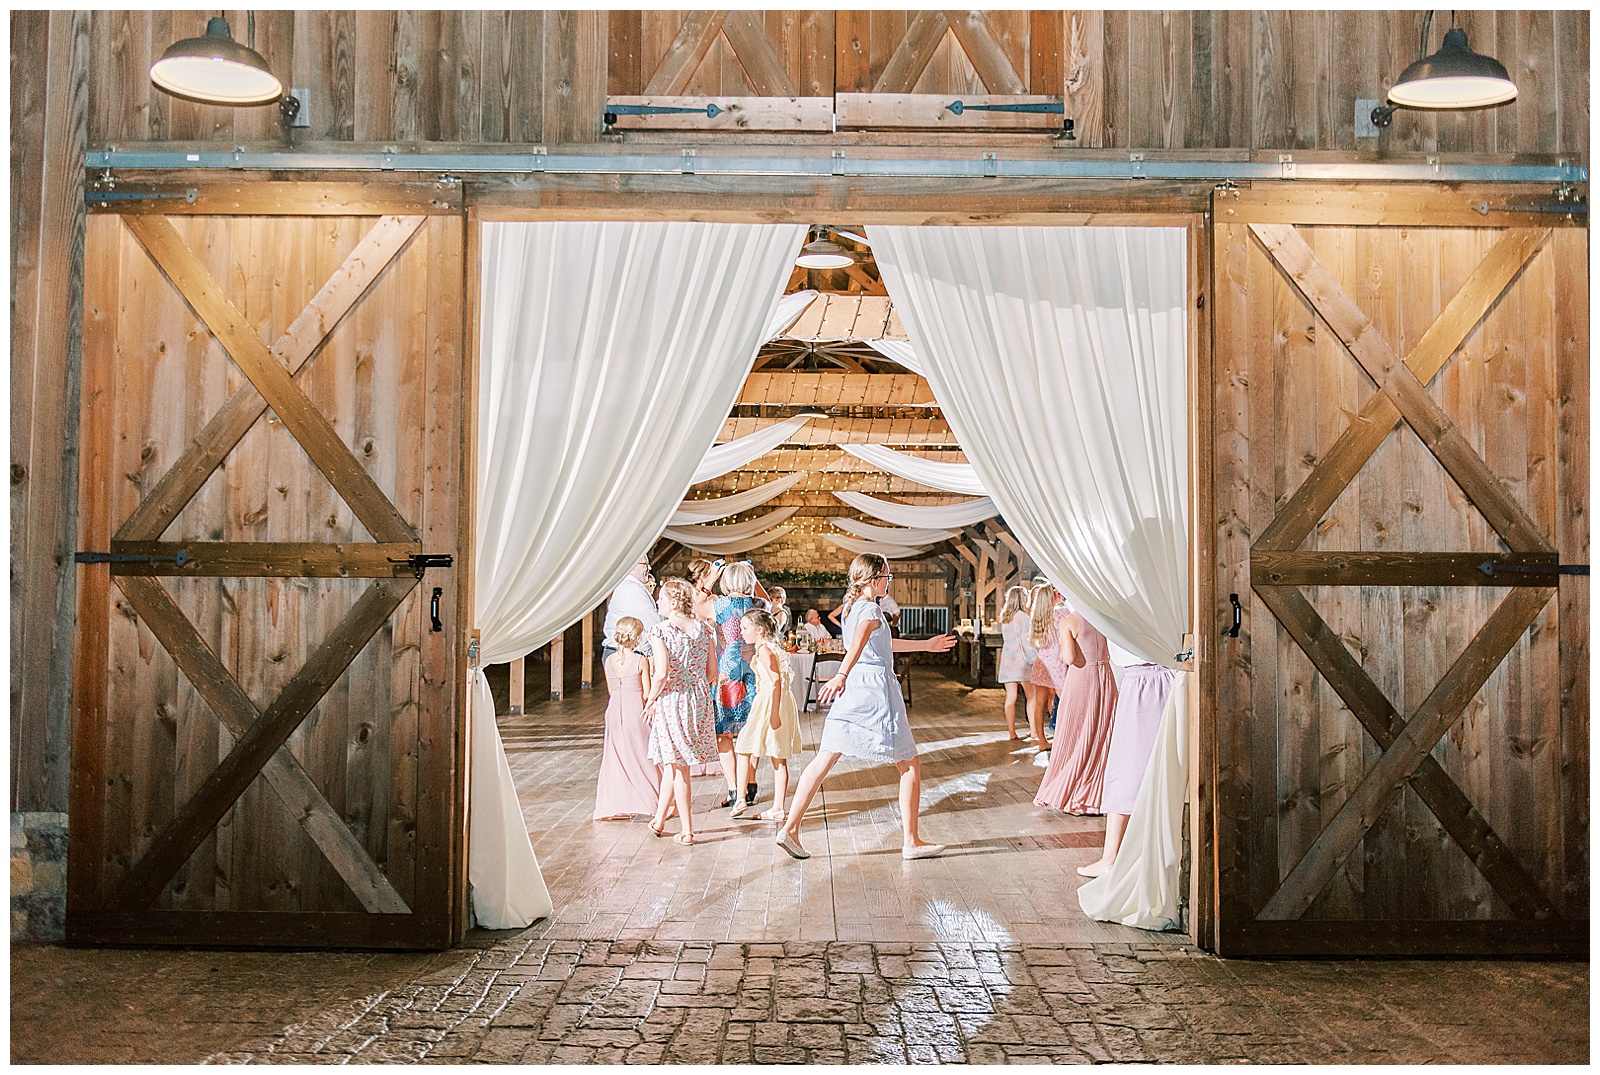 guests dance at indoor summer wedding reception in wooden barn